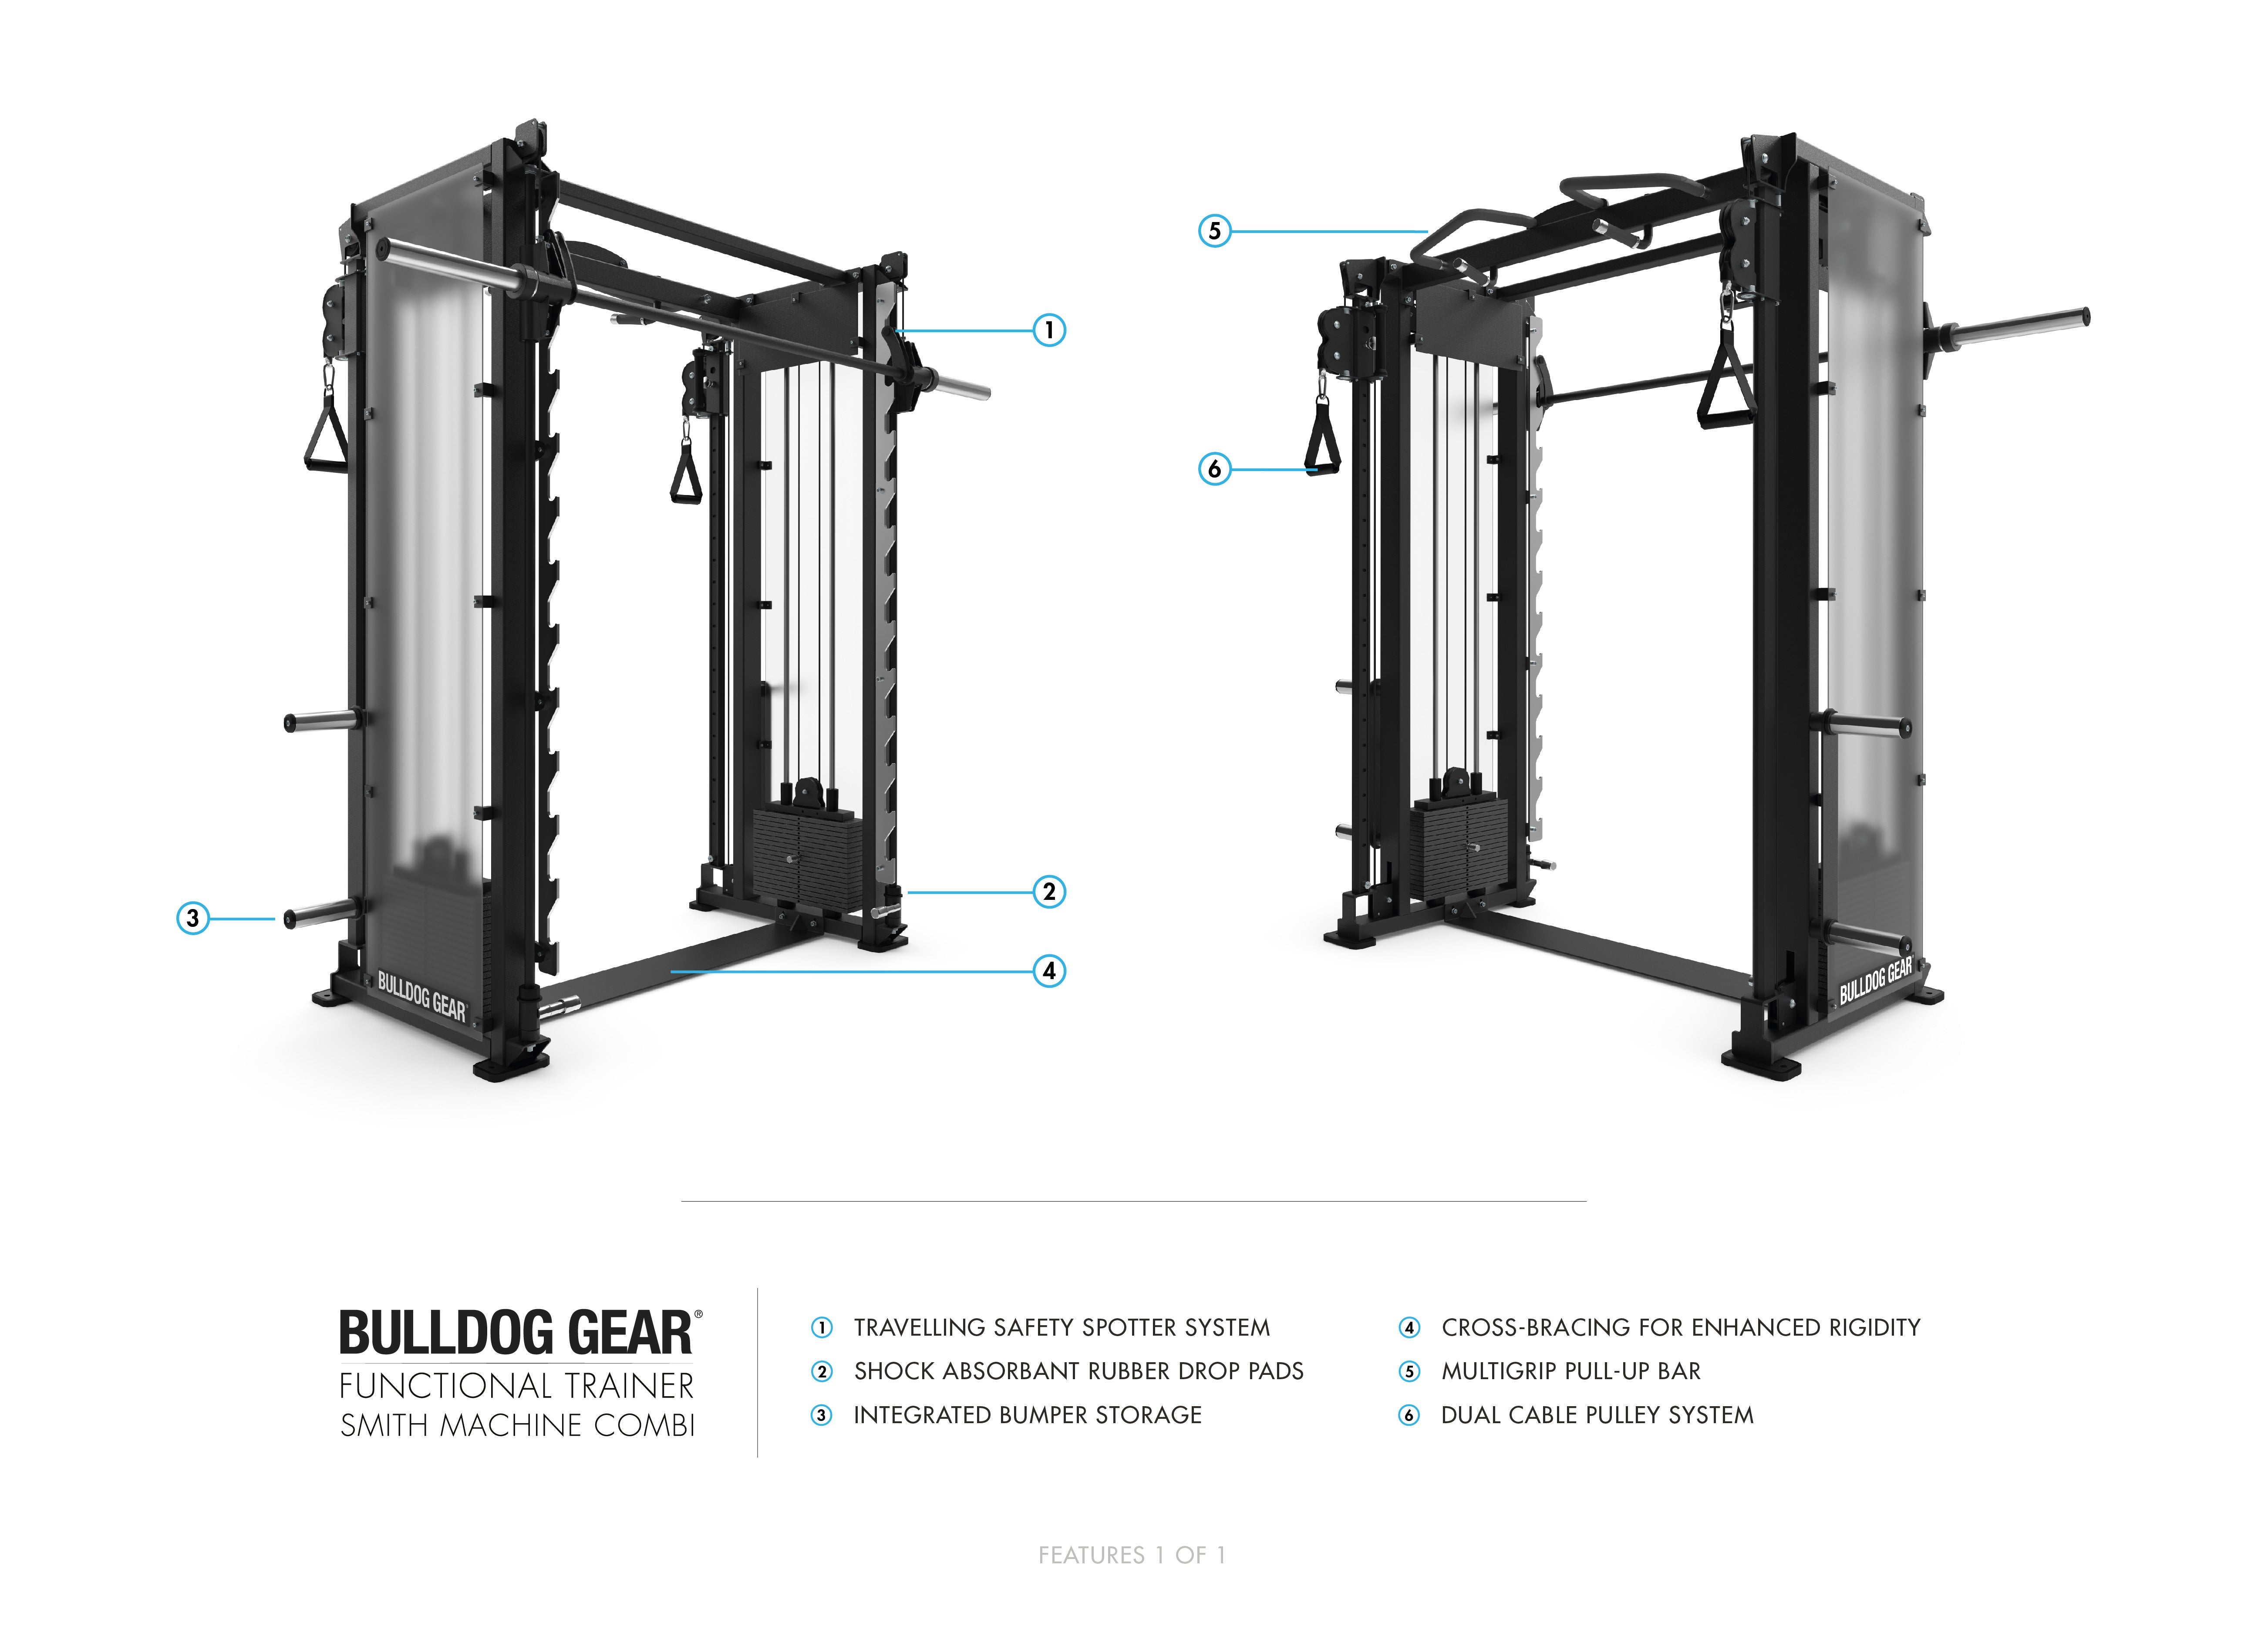 Bulldog Gear - Smith Machine & Functional Trainer Combo